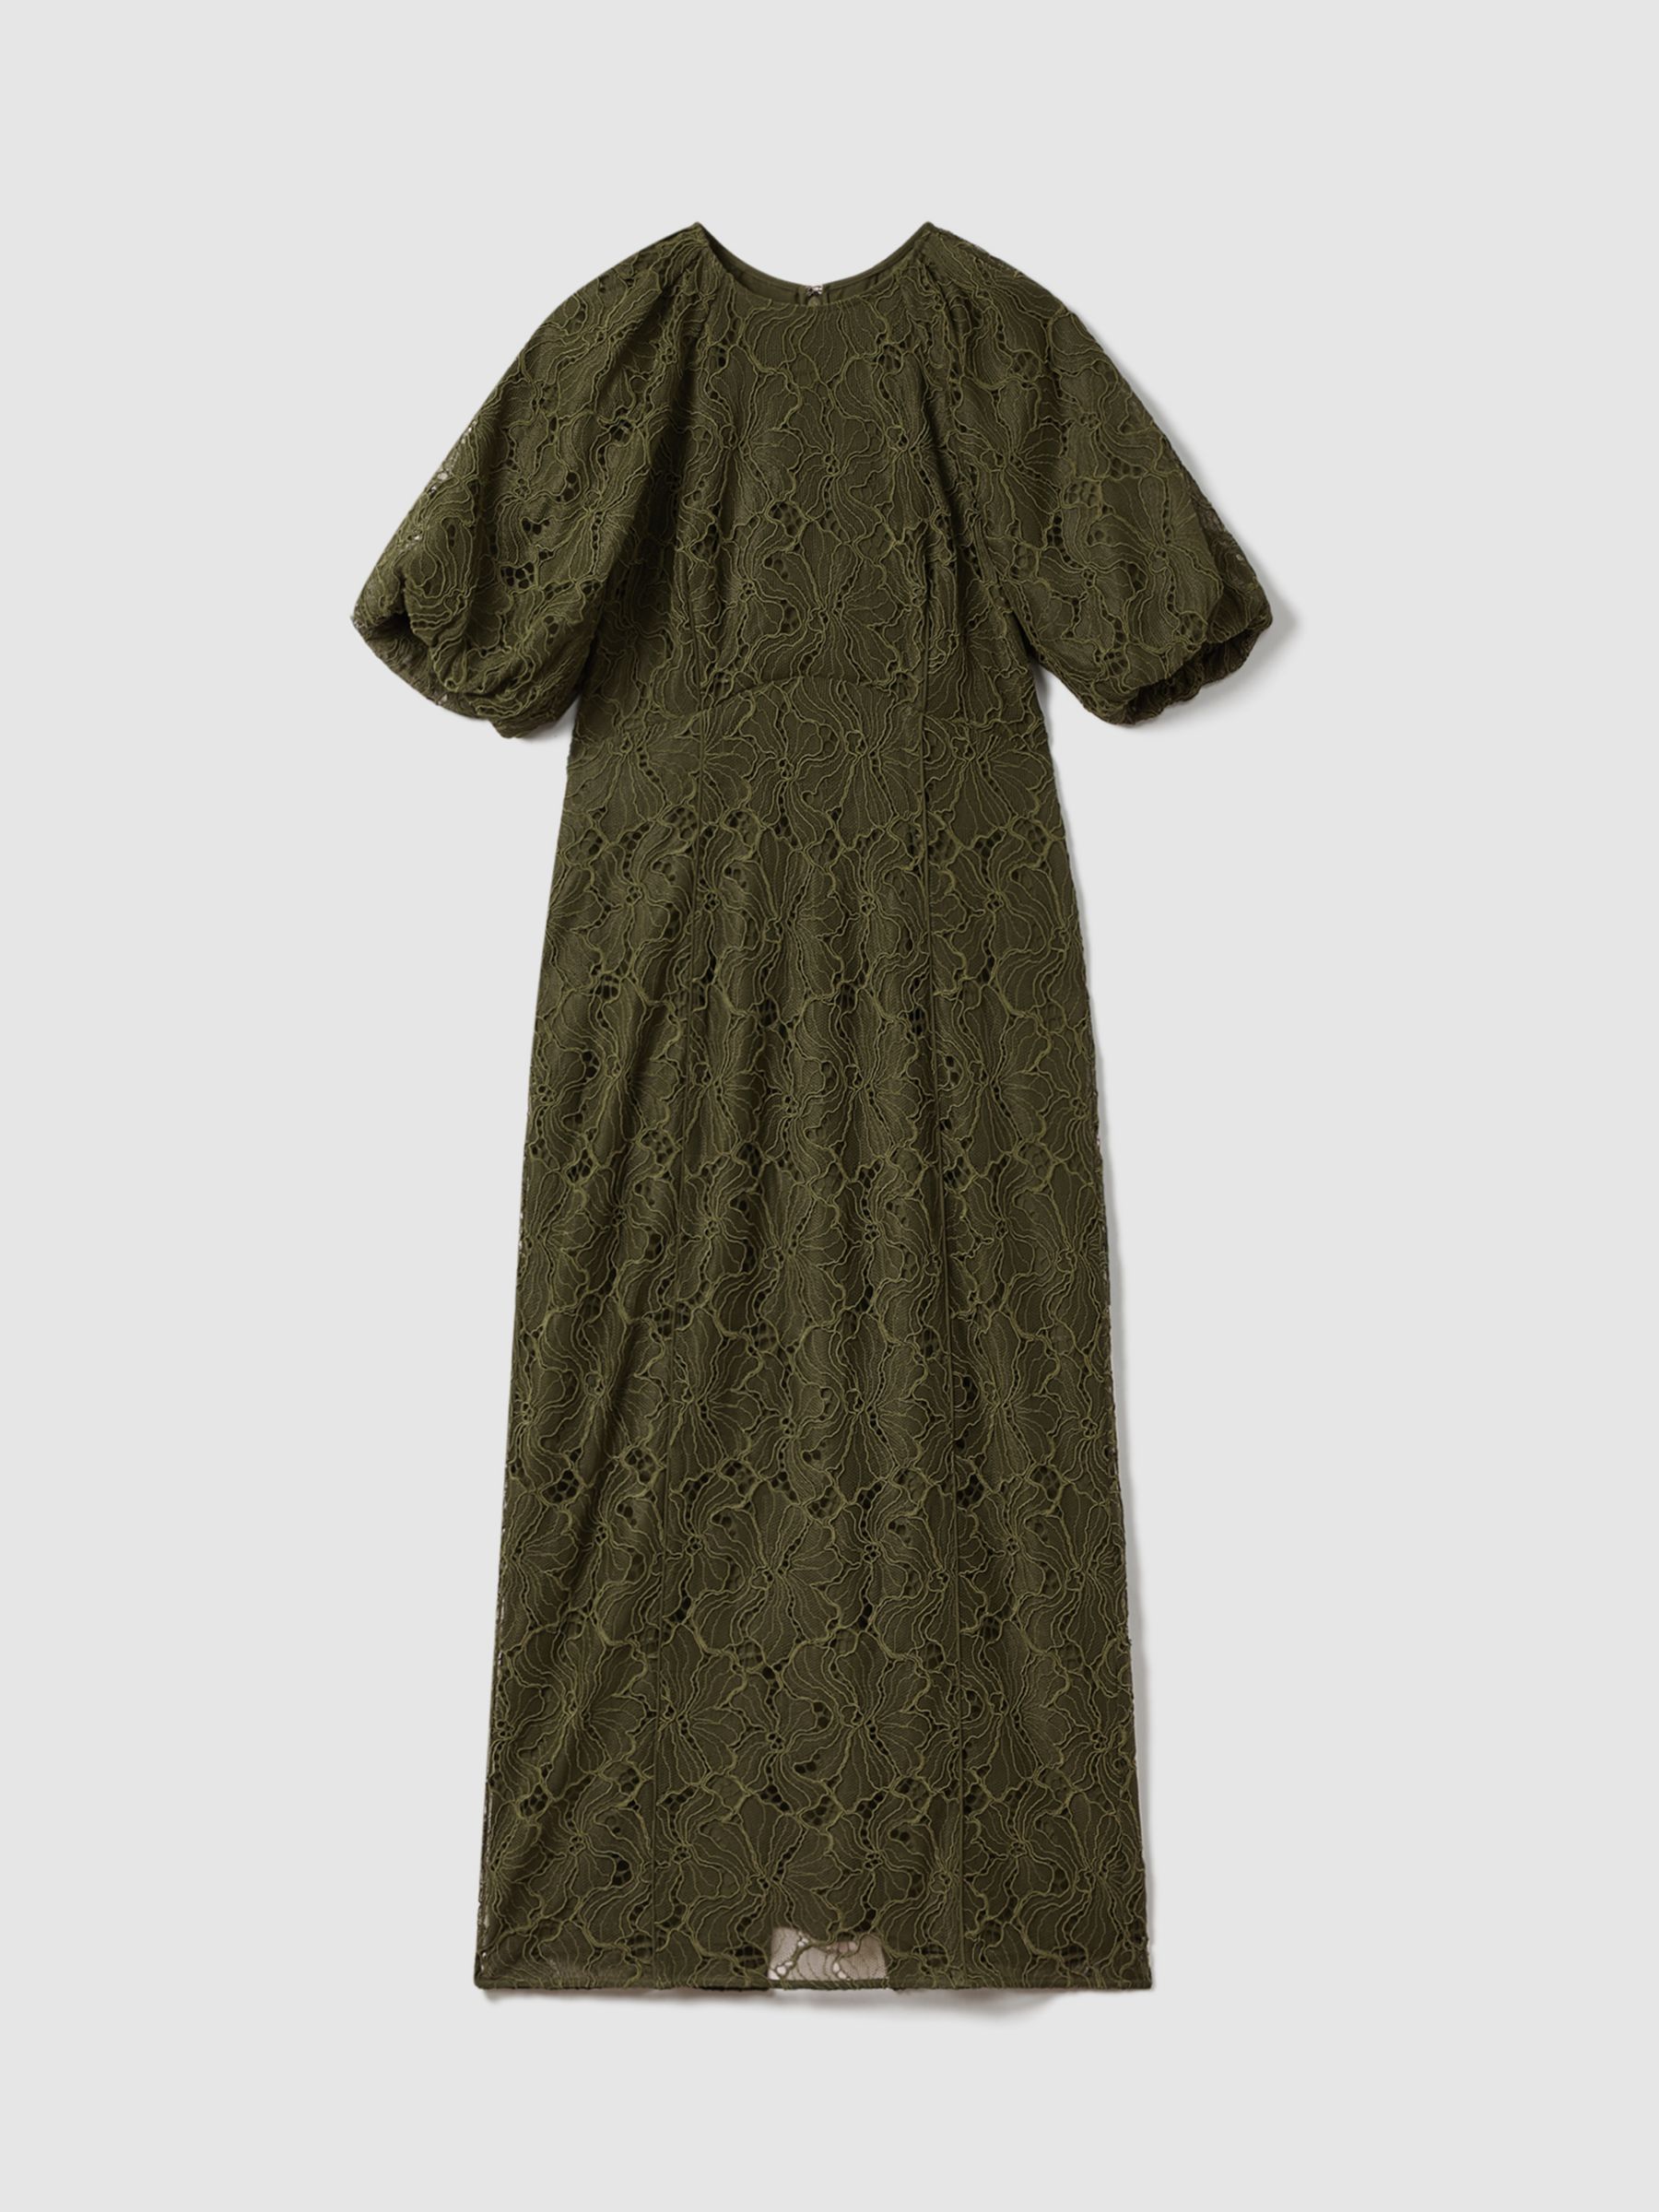 FLORERE Corded Lace Puff Sleeve Midi Dress, Dark Khaki, 14